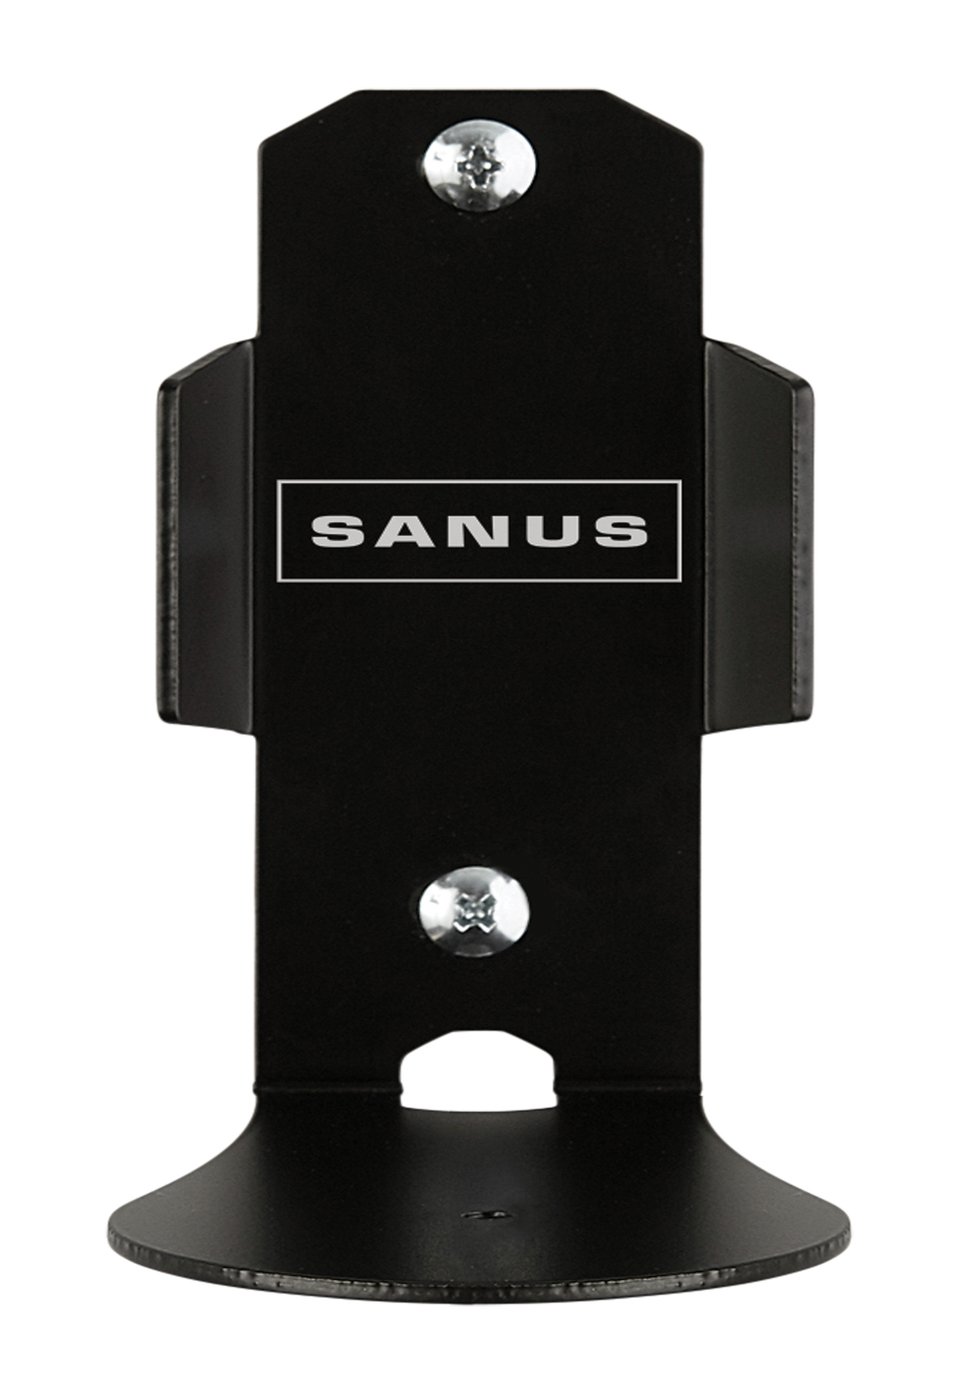 Sanus Echo / Echo Plus Single Wall Mount - Black